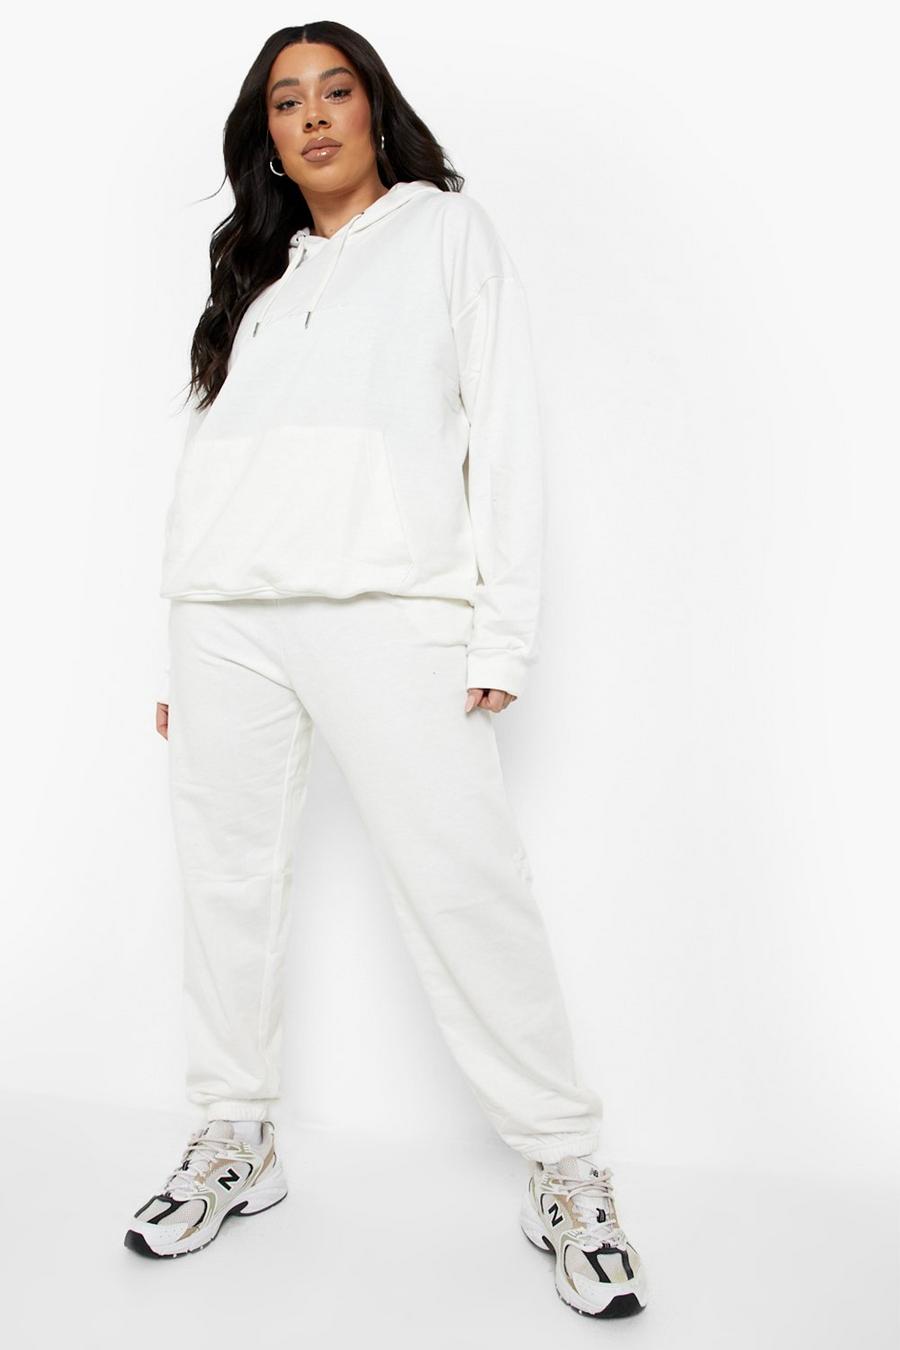 Pantaloni tuta Plus Size oversize Woman con ricami, Ecru bianco image number 1